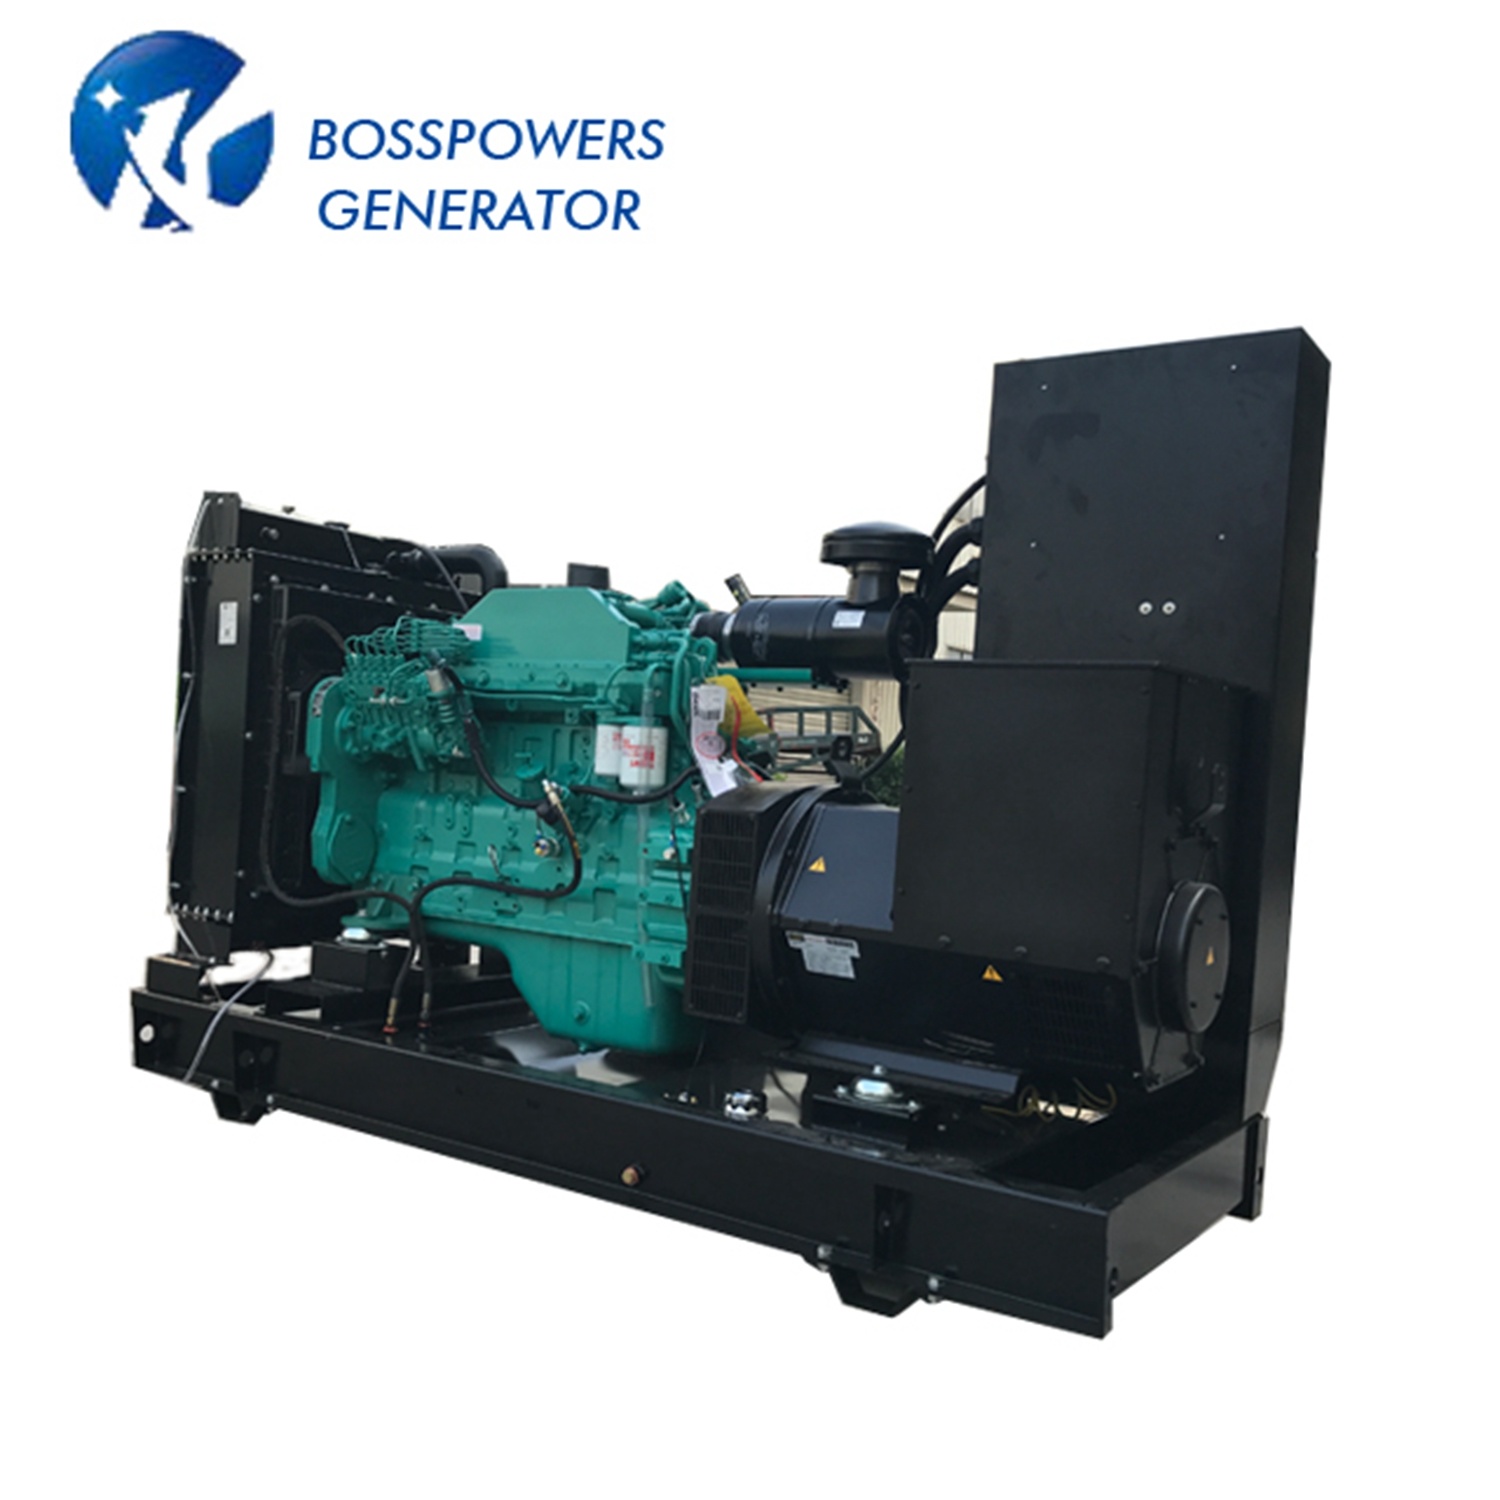 1100kVA Standby Power Cummins Generator Diesel Engine Power System with Synchronized System